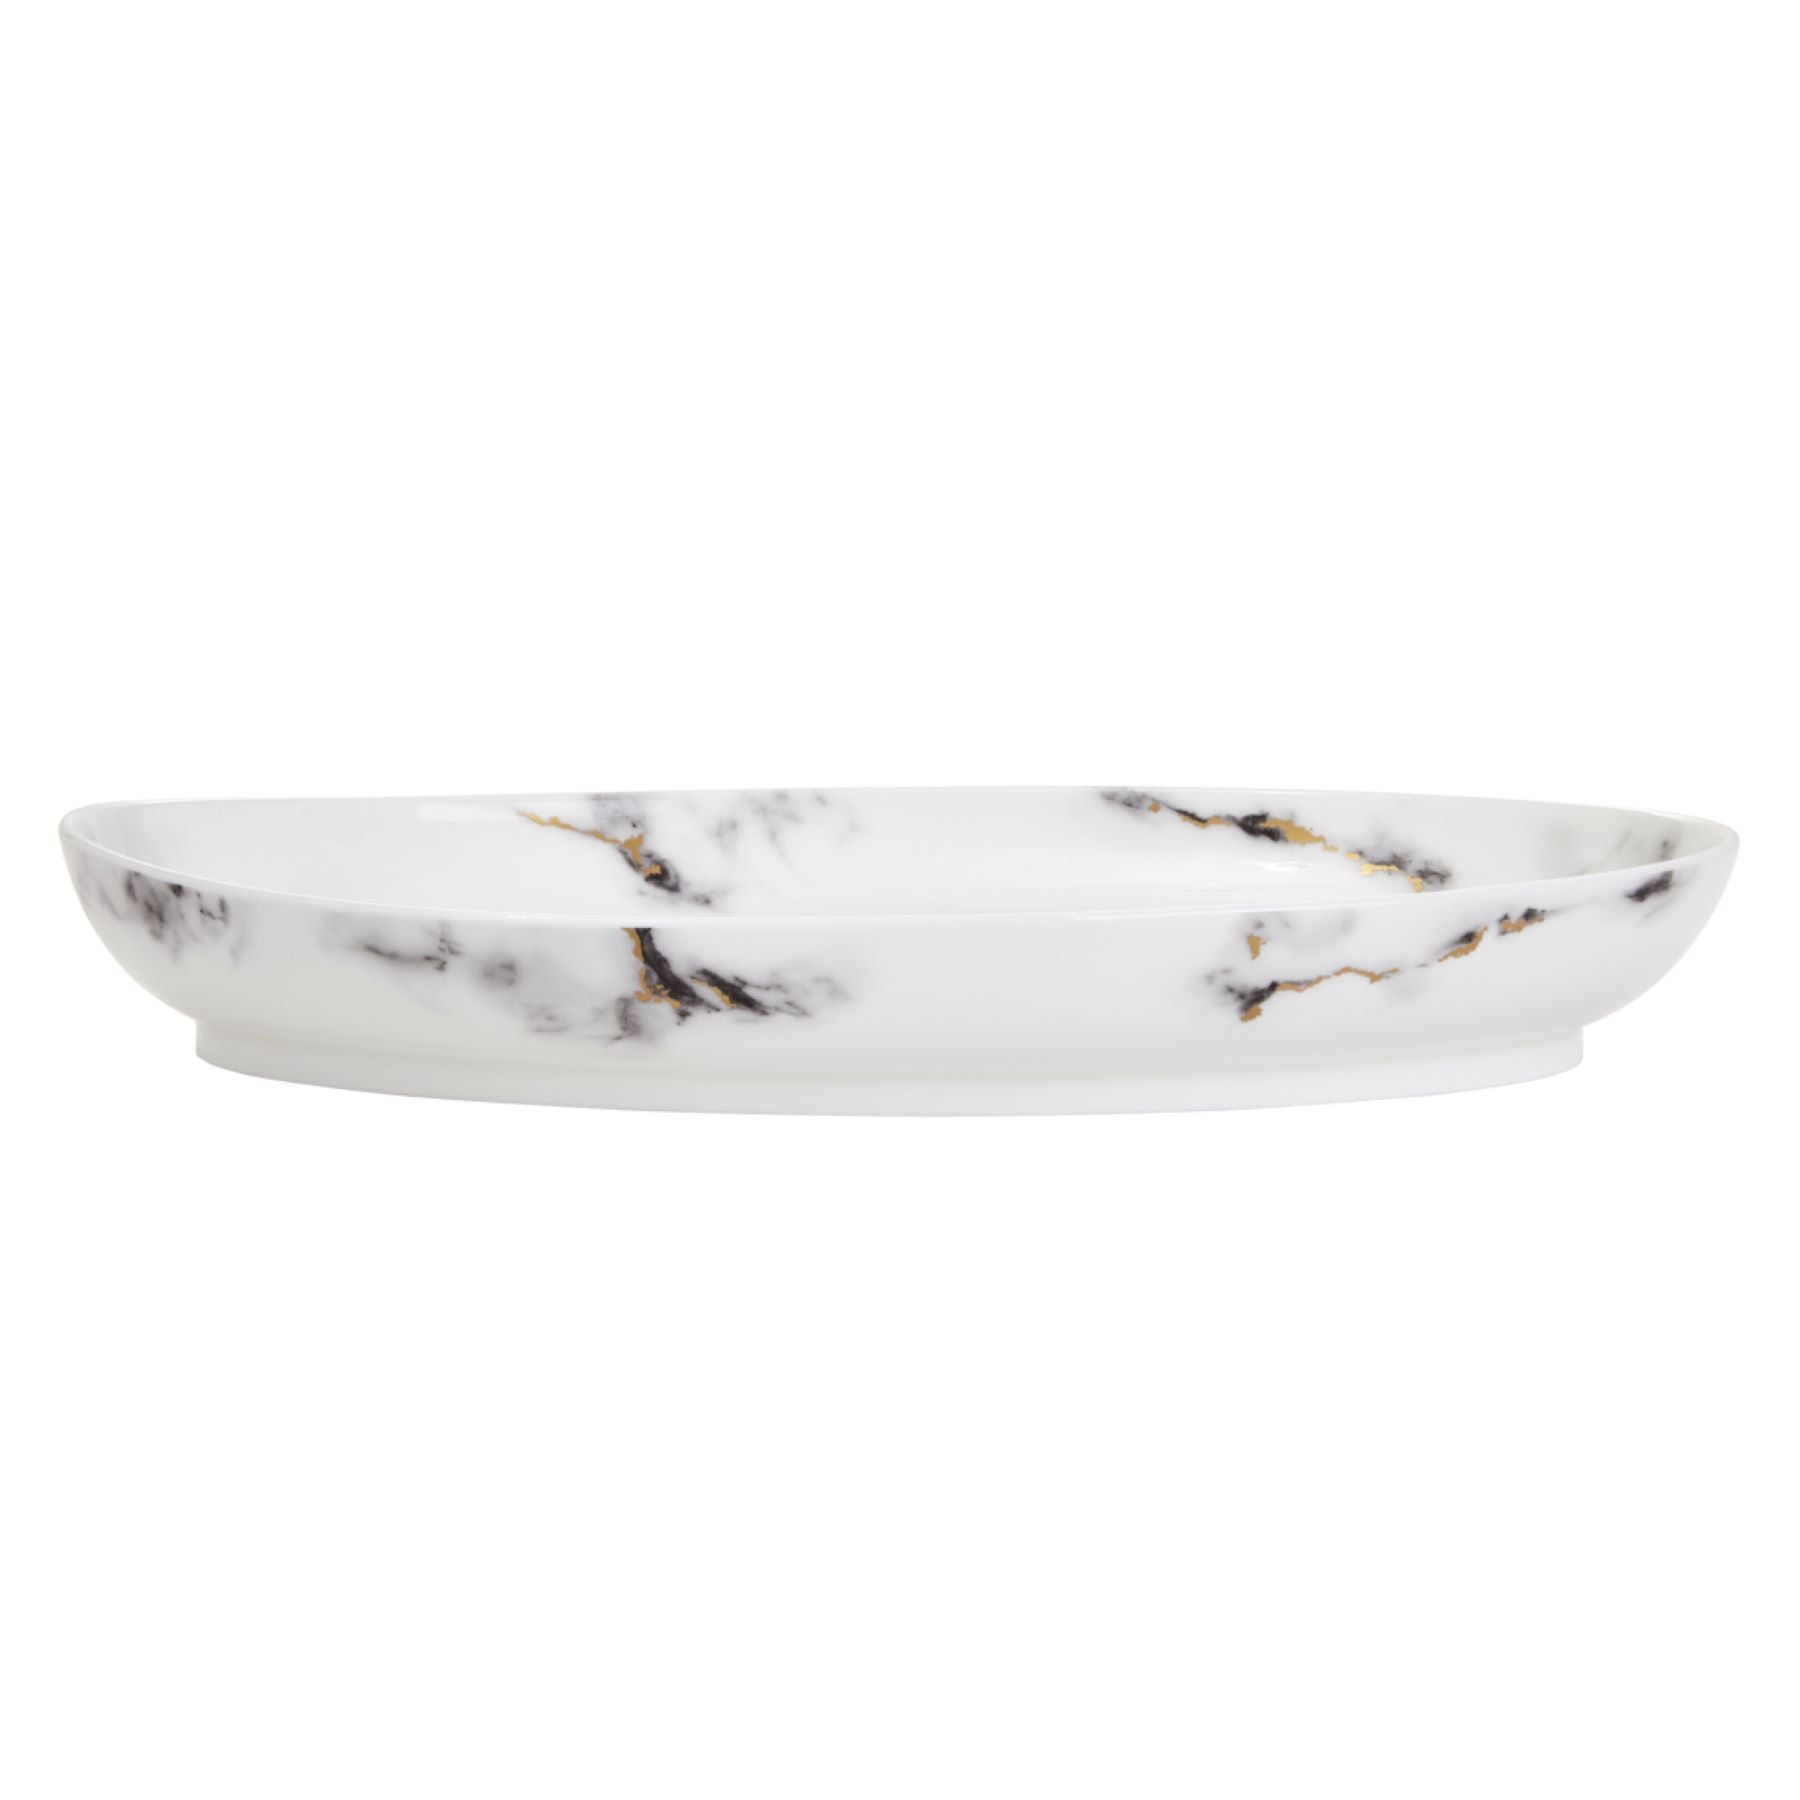 Prouna Marble Venice Fog 16" Oval Platter White Background Photo